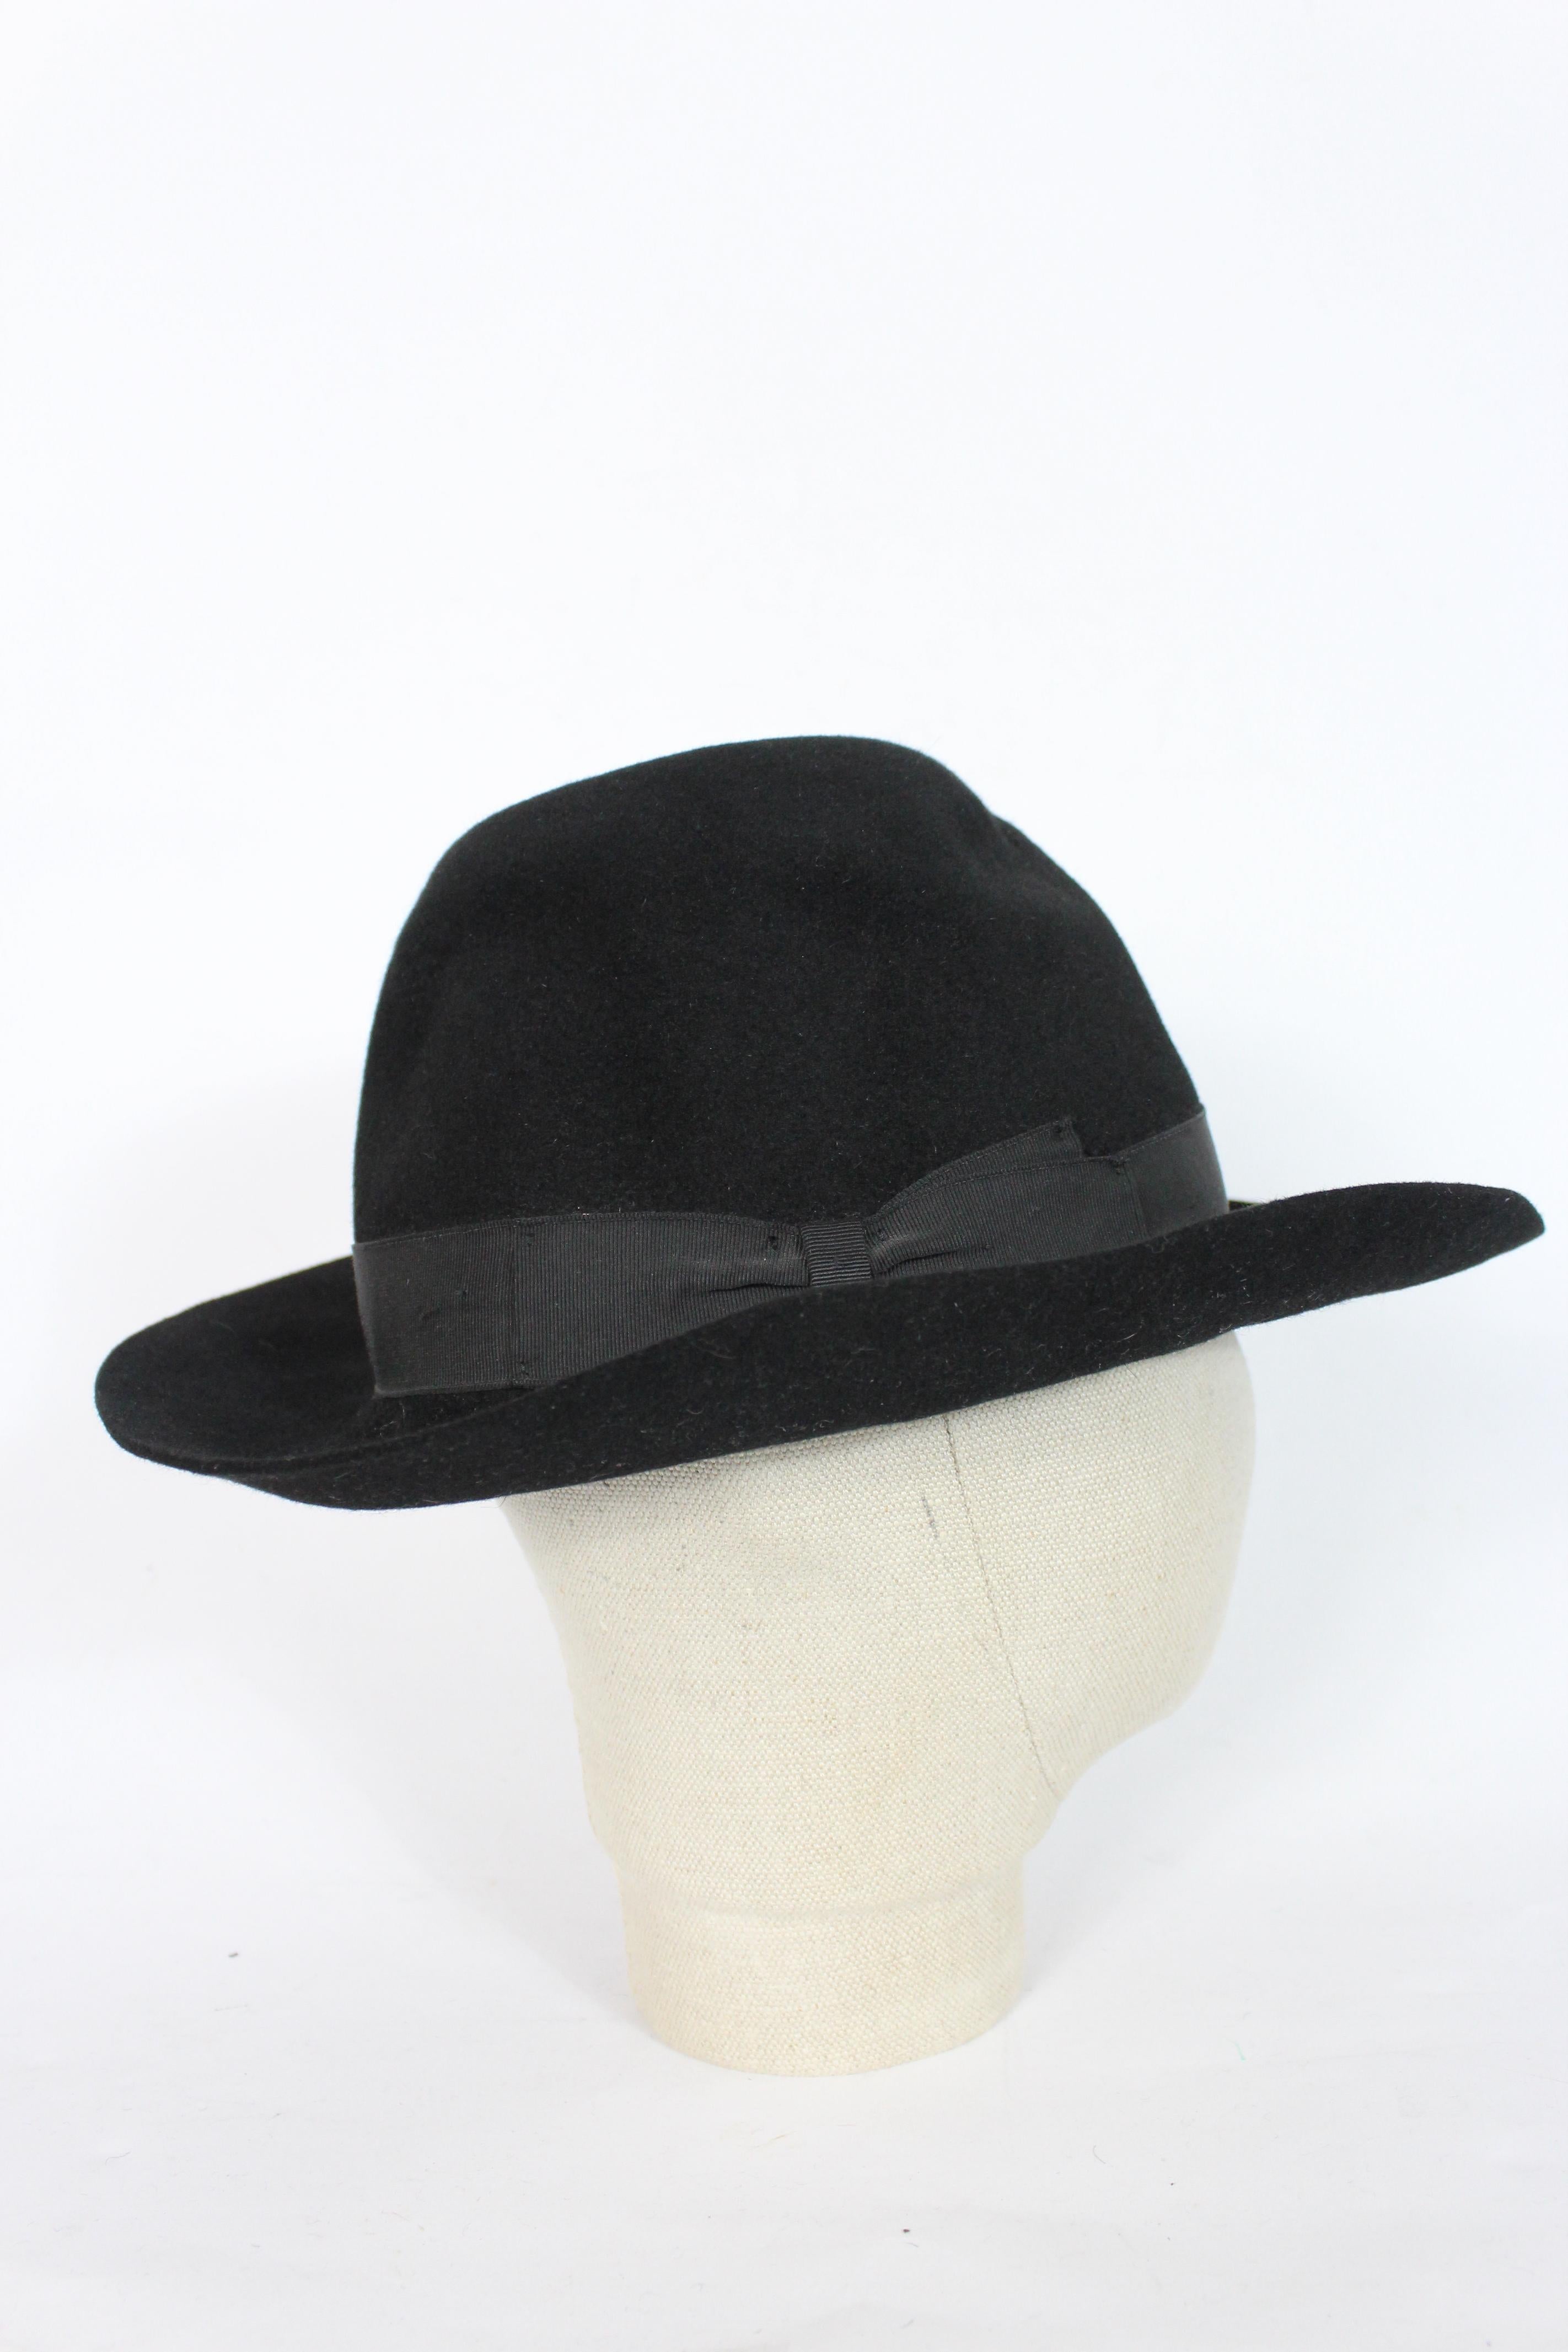 Women's Borsalino Black Felt Fedora Hat